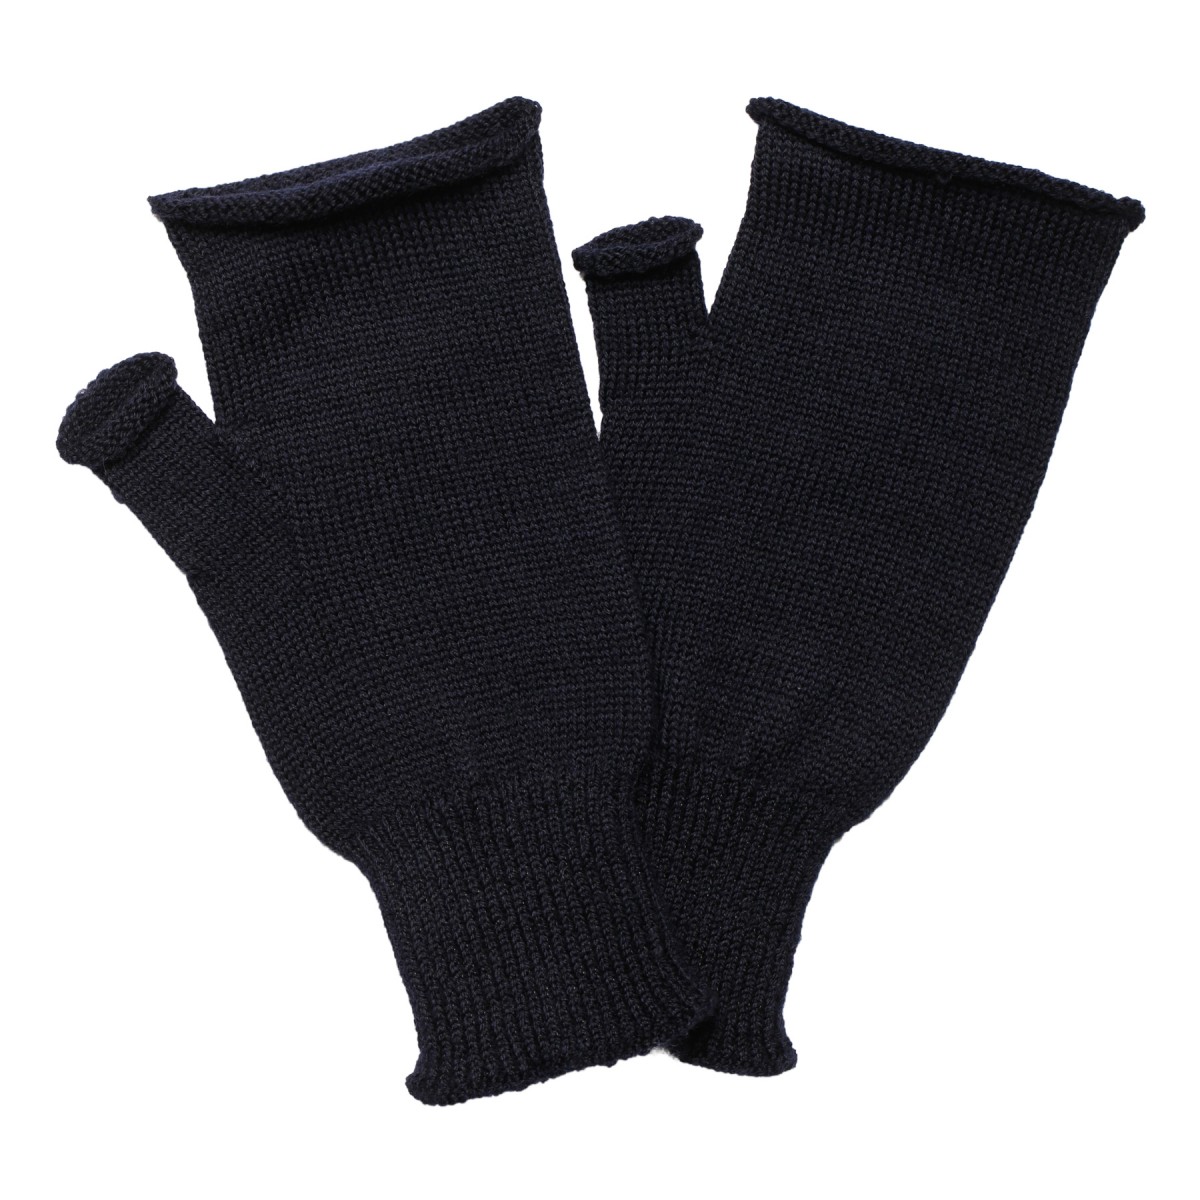 Navy wool Fingerless Mitten Gloves